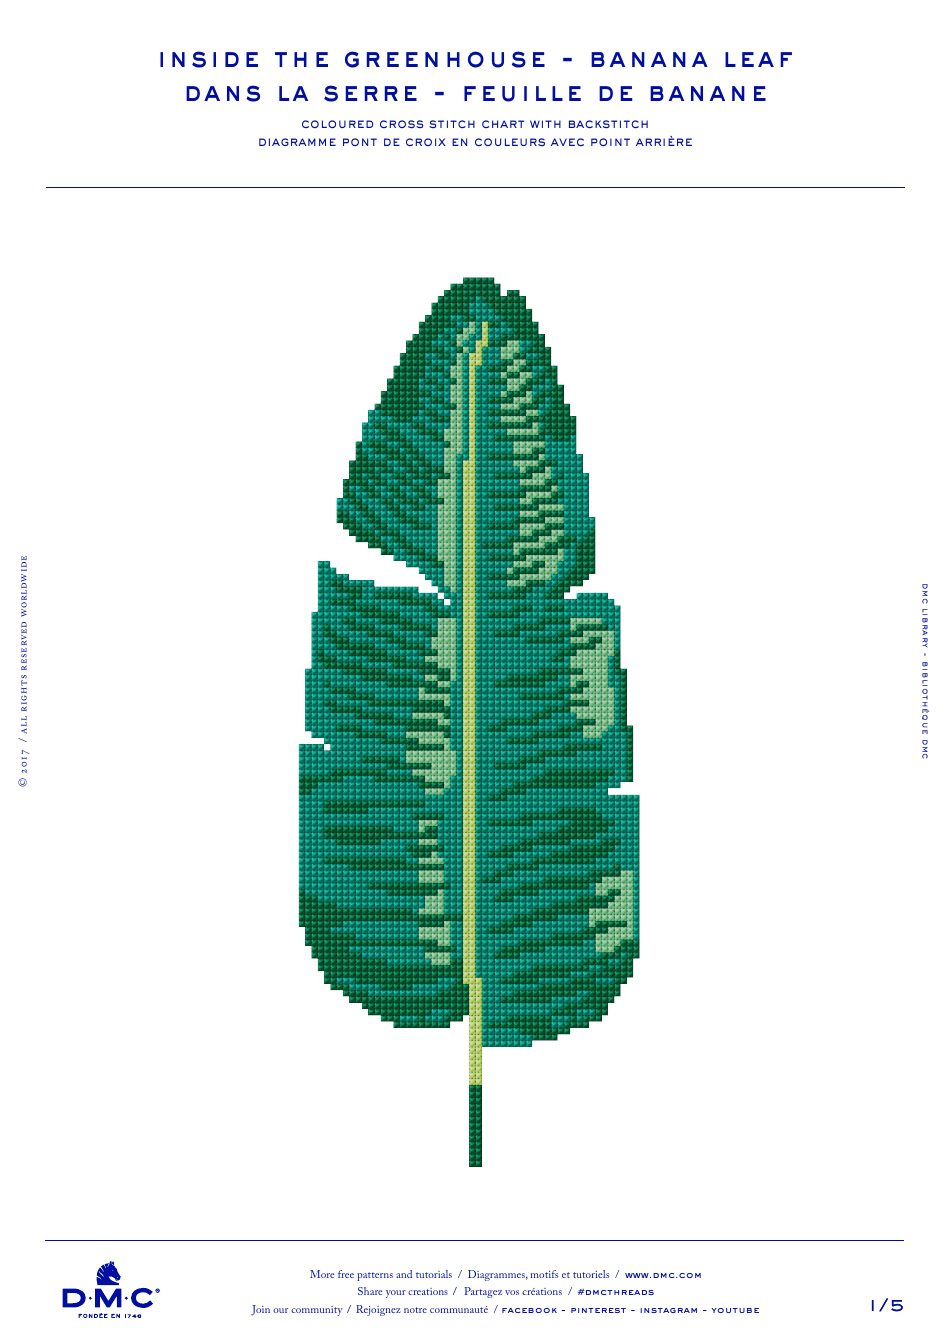 Greenhouse cross-stitch pattern with banana leaf design